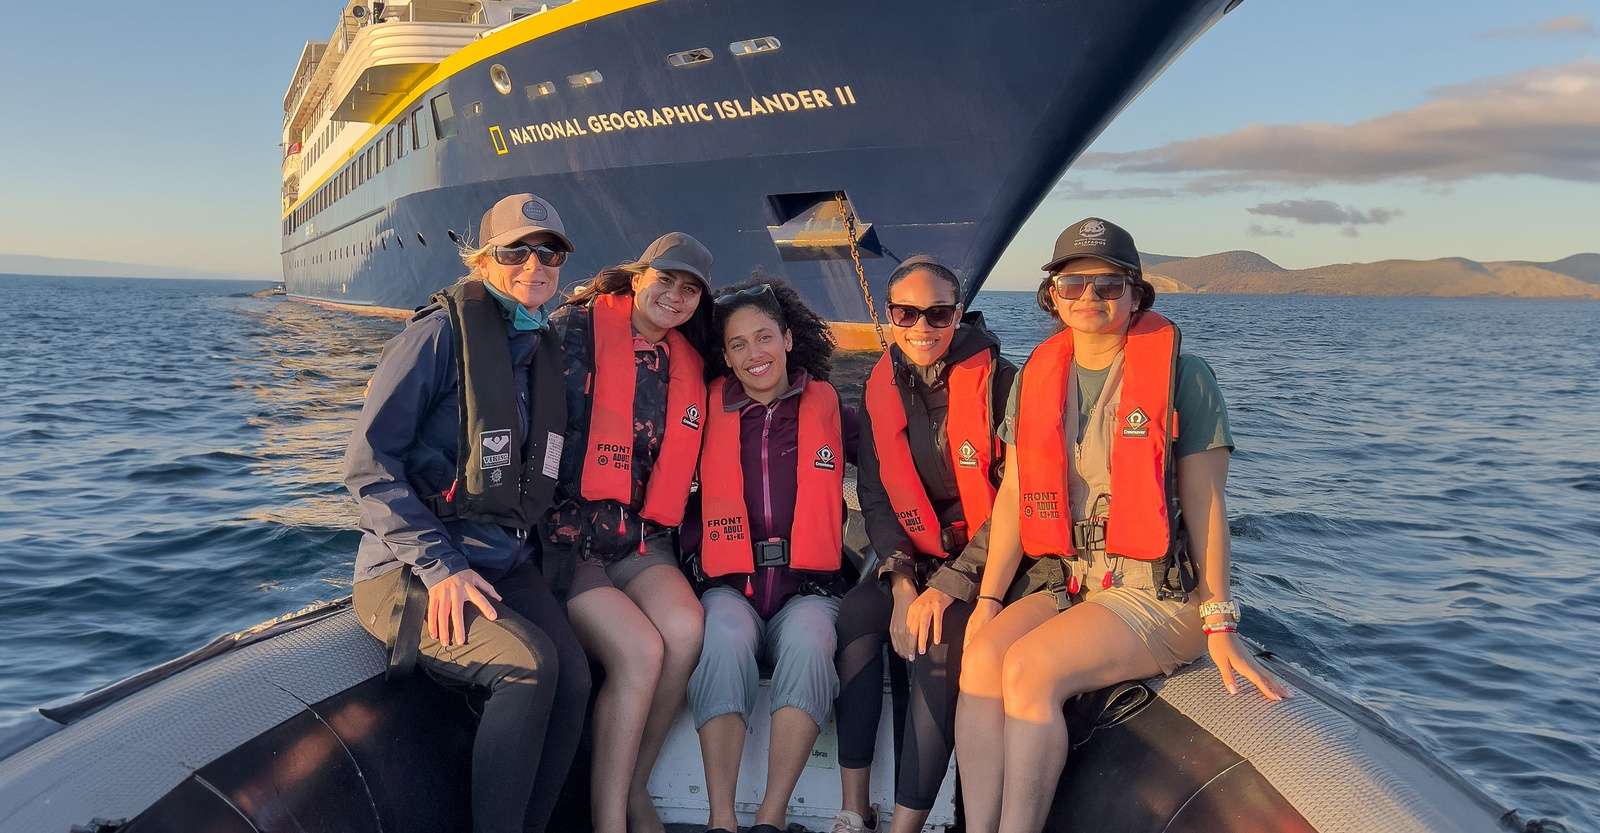 Guests aboard Zodiac and National Geographic Islander II, Galapagos Islands, Ecuador.